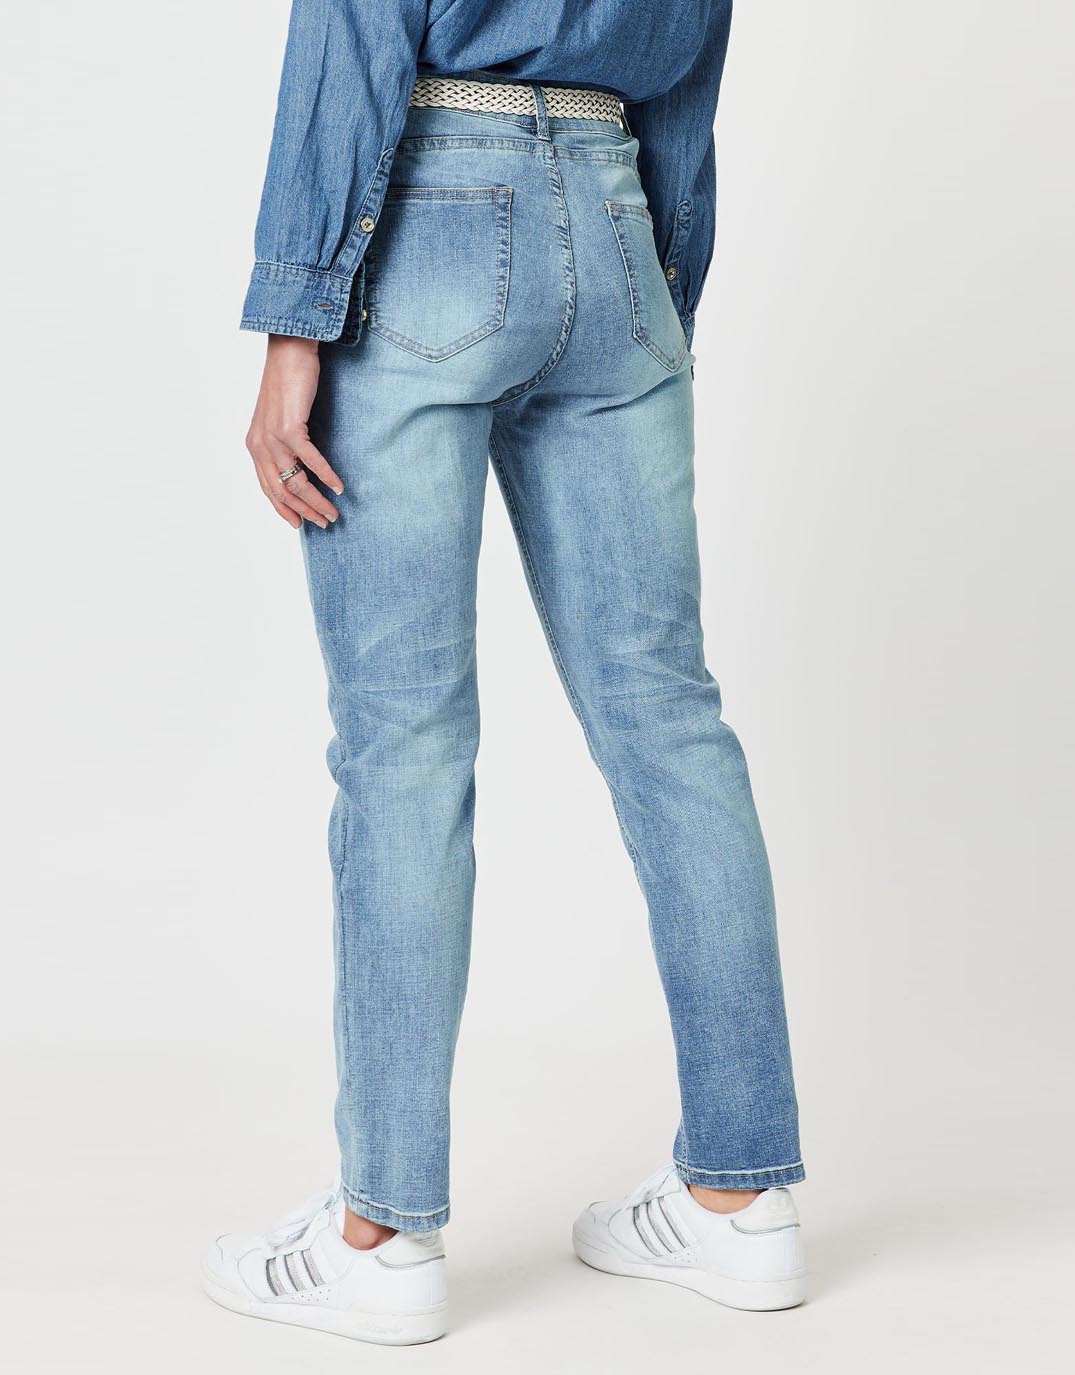 gordon-smith-marvel-jeans-denim-womens-clothing